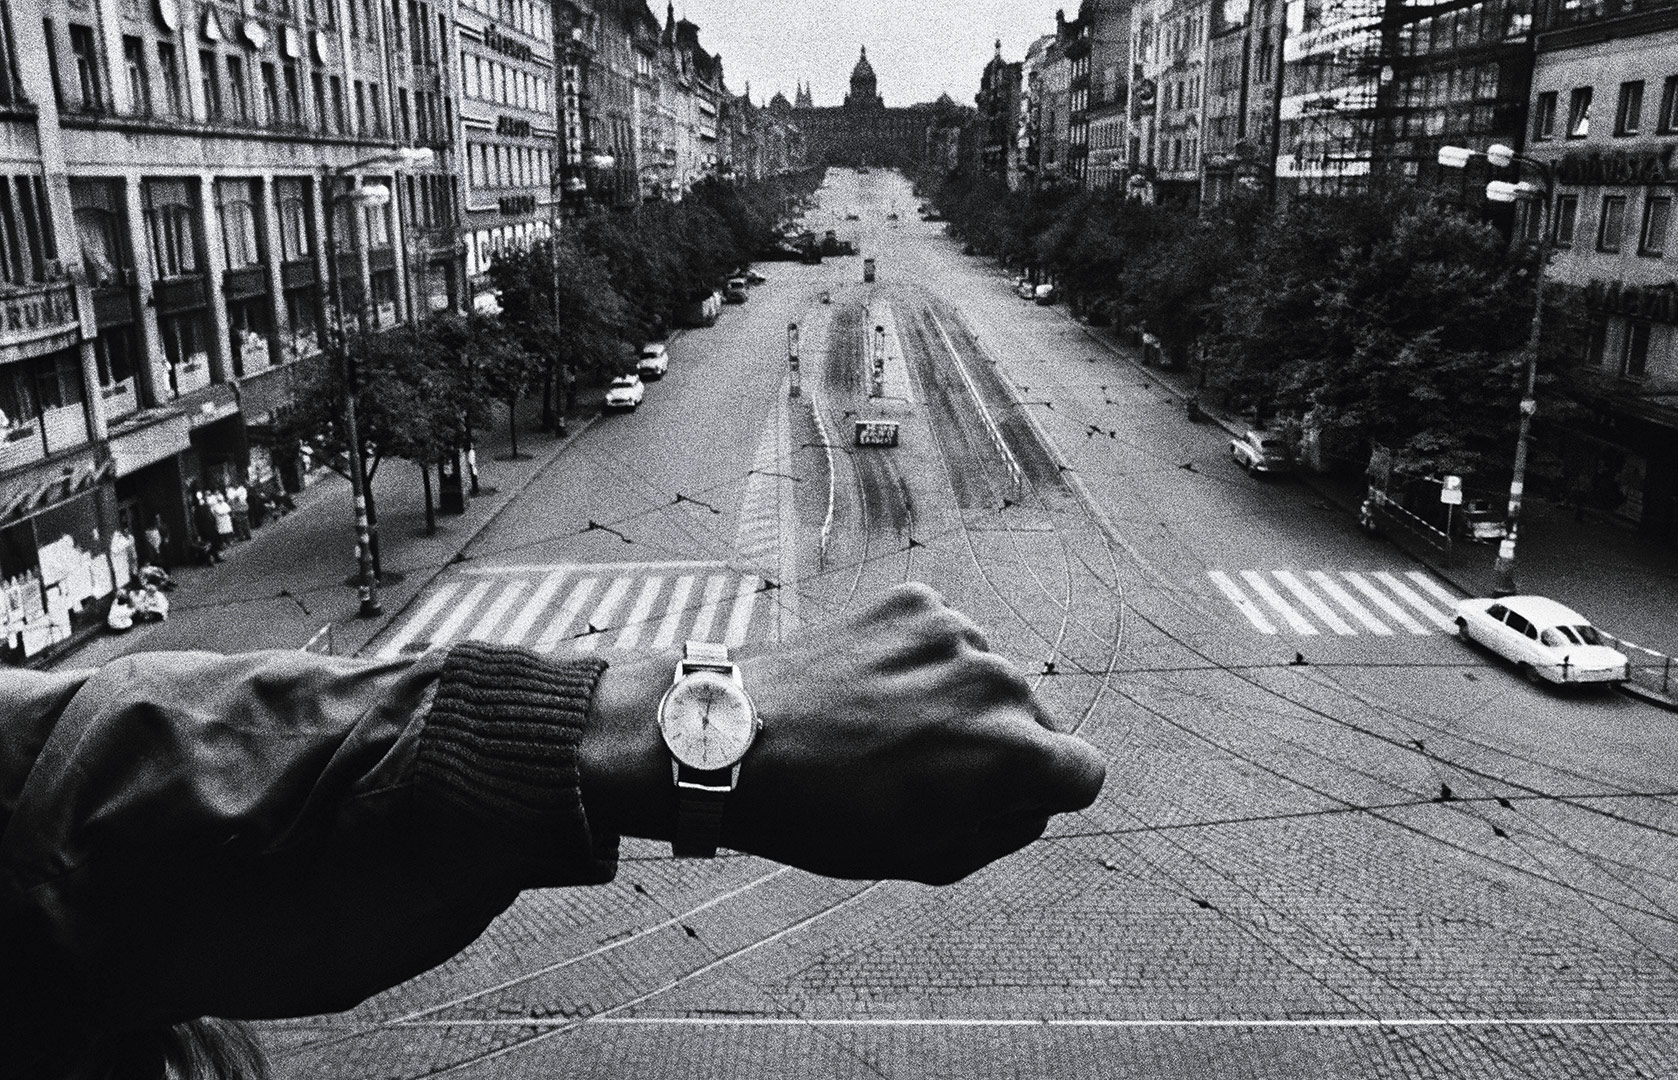 time-100-influential-photos-josef-koudelka-invasion-prague-60